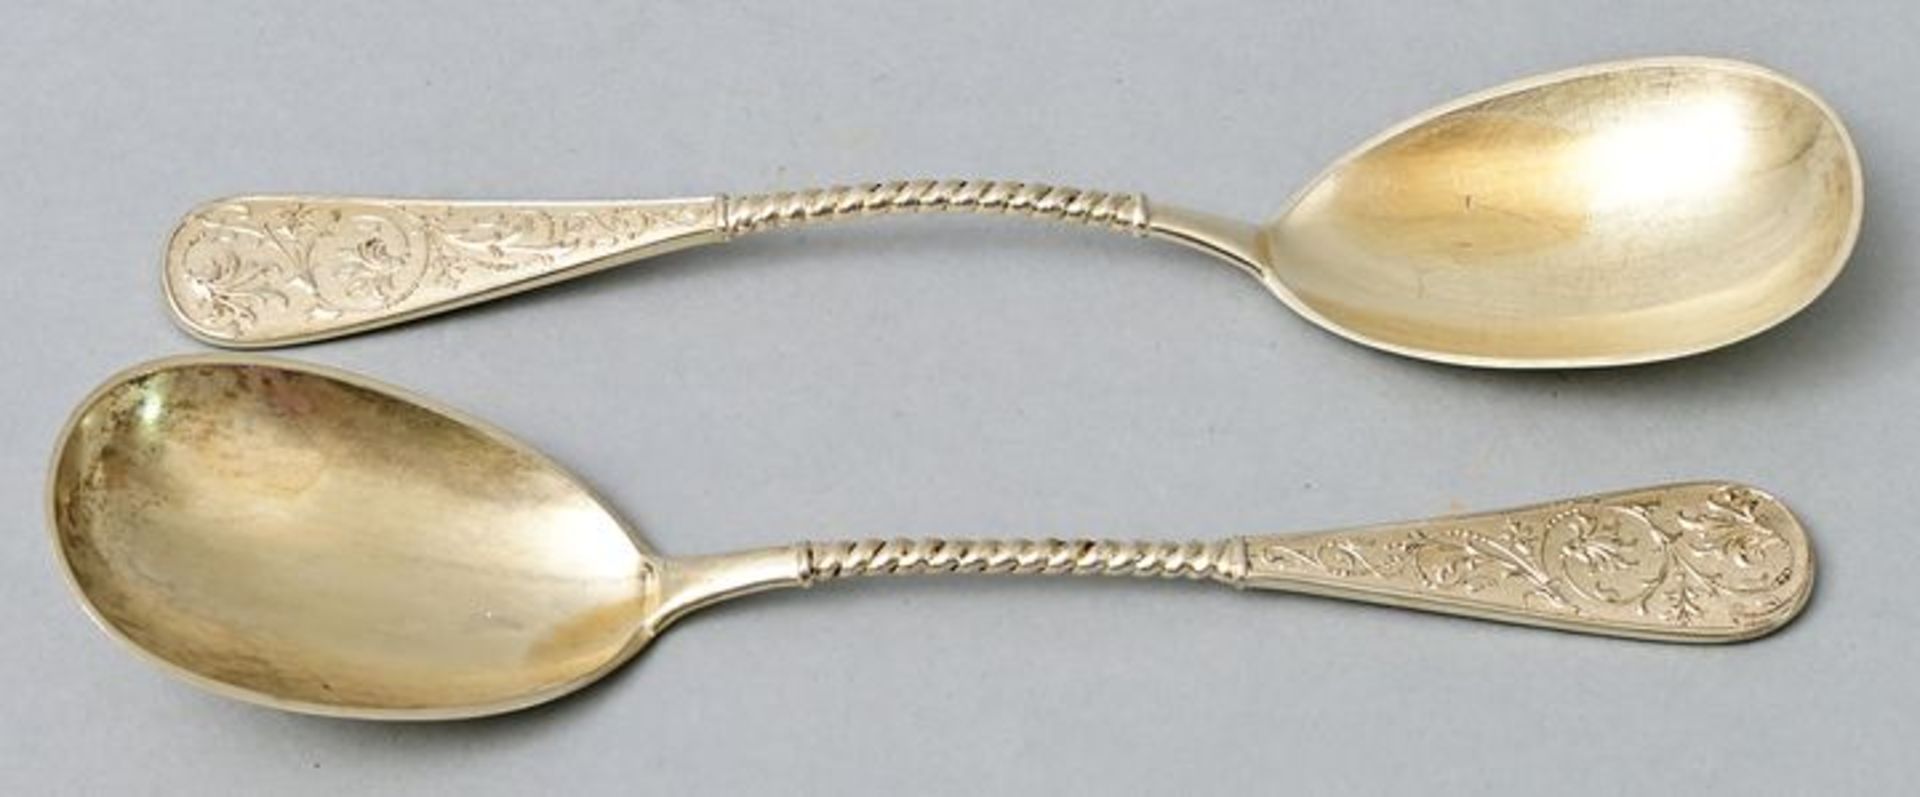 Vorlegelöffel/ serving spoons